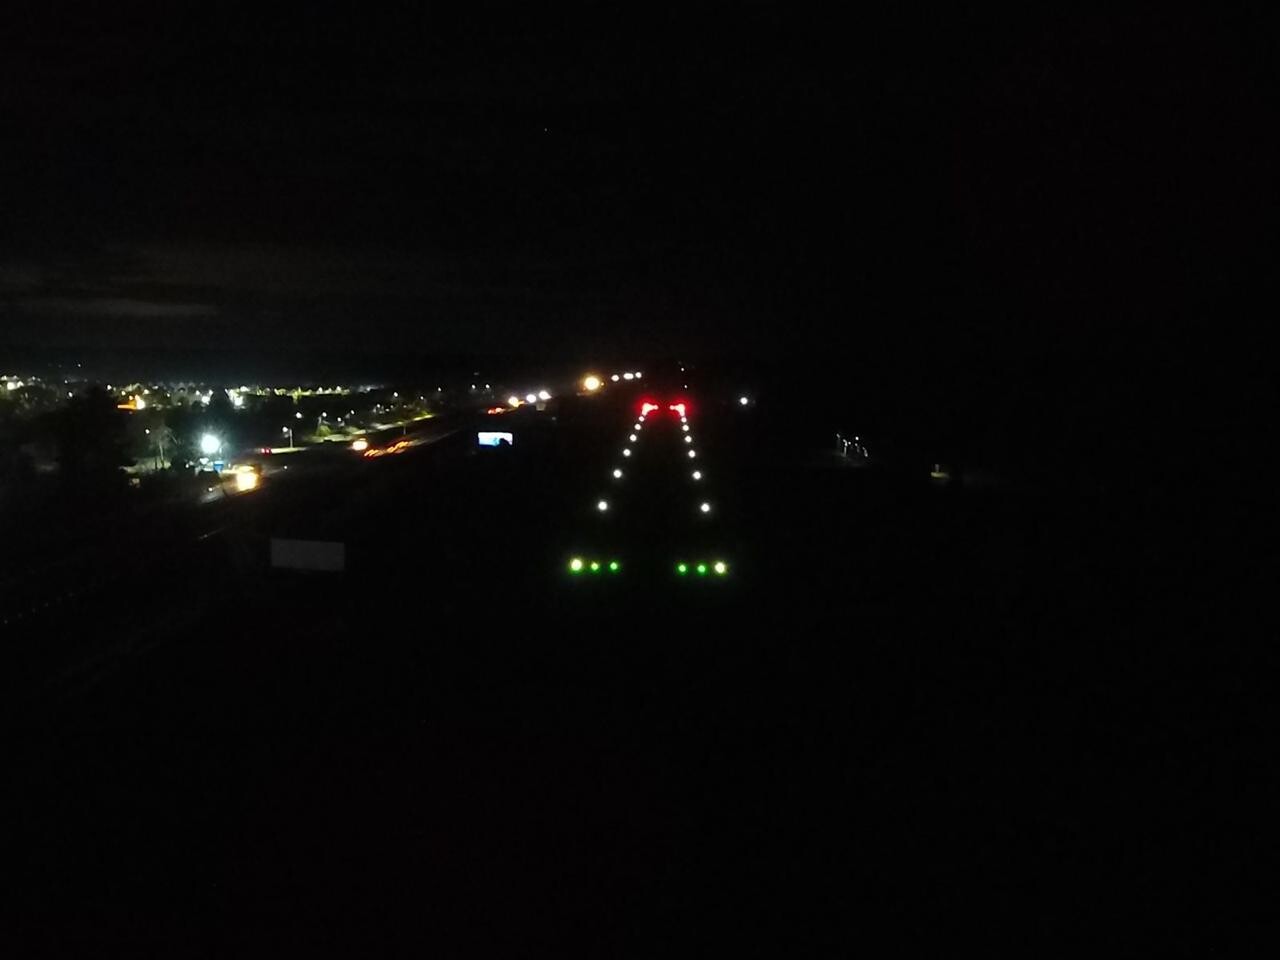 frutillar airport runway at night-time